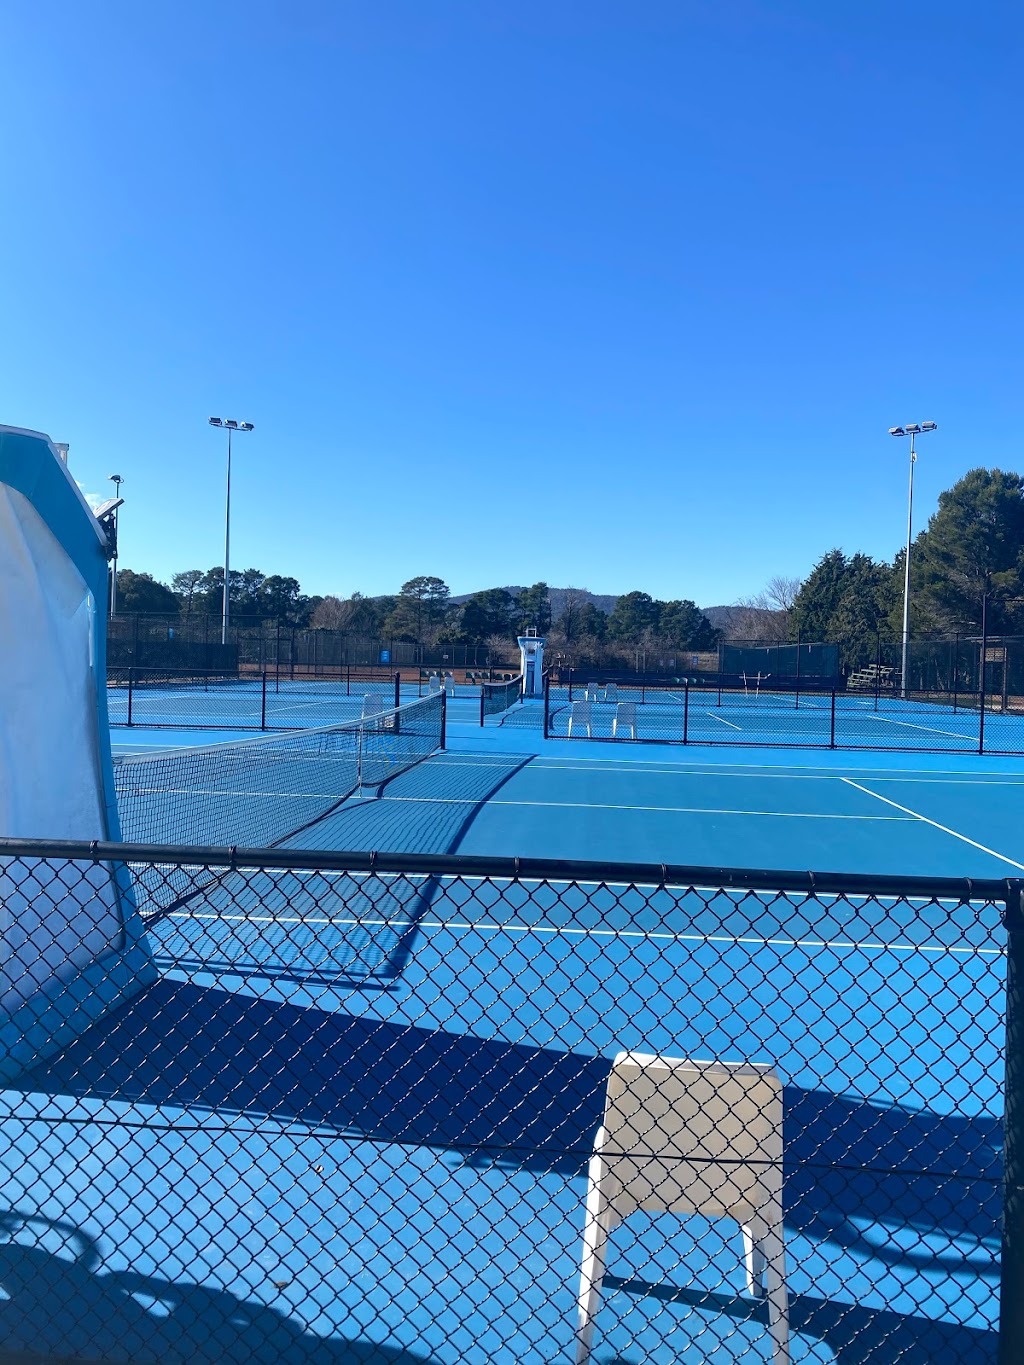 Canberra Tennis World | 3 Riggall Pl, Lyneham ACT 2602, Australia | Phone: 1300 836 647